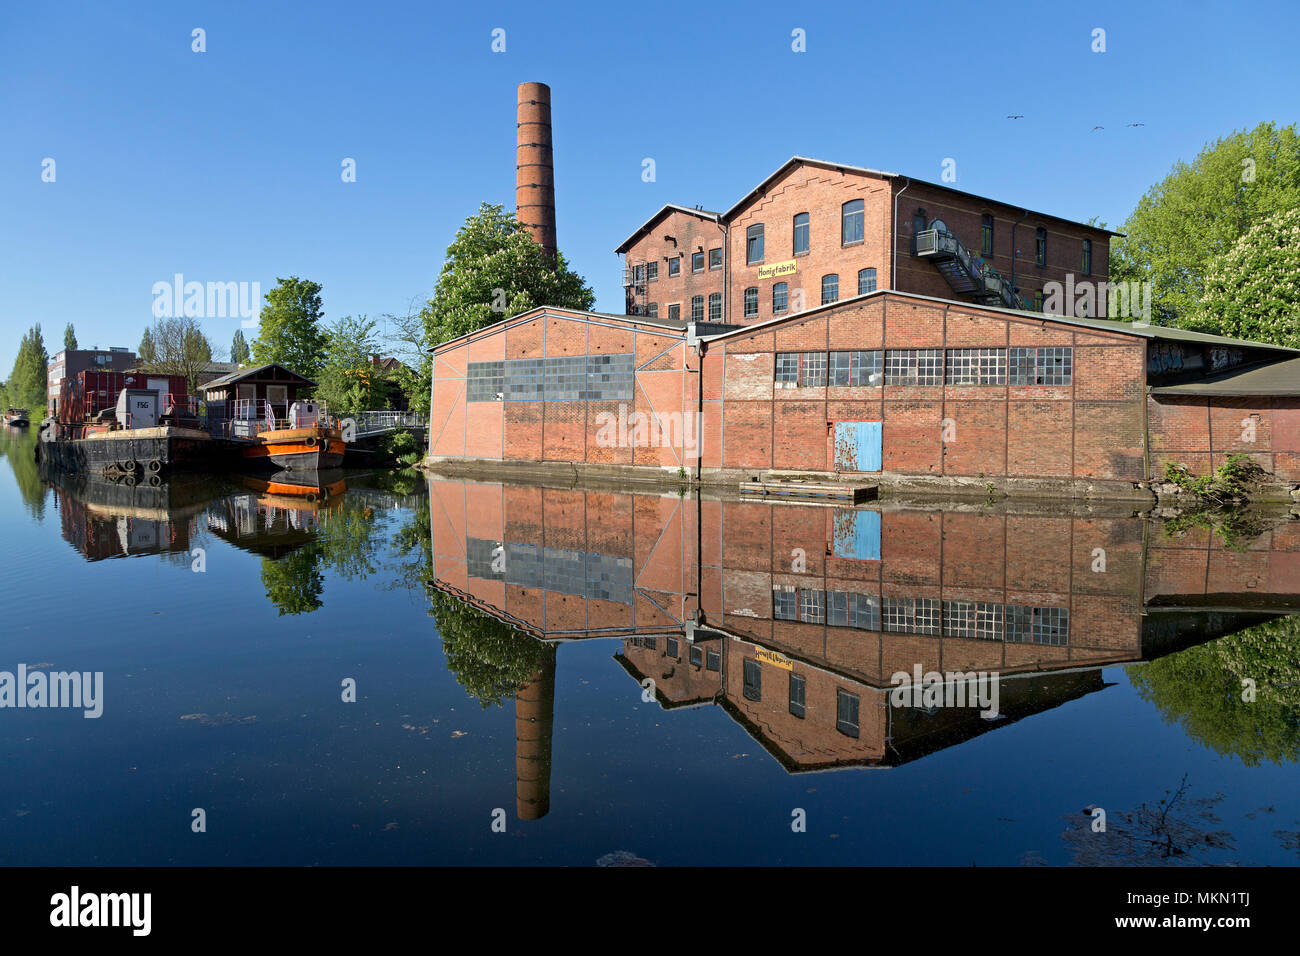 Honigfabrik, Wilhelmsburg, Amburgo, Germania Foto Stock